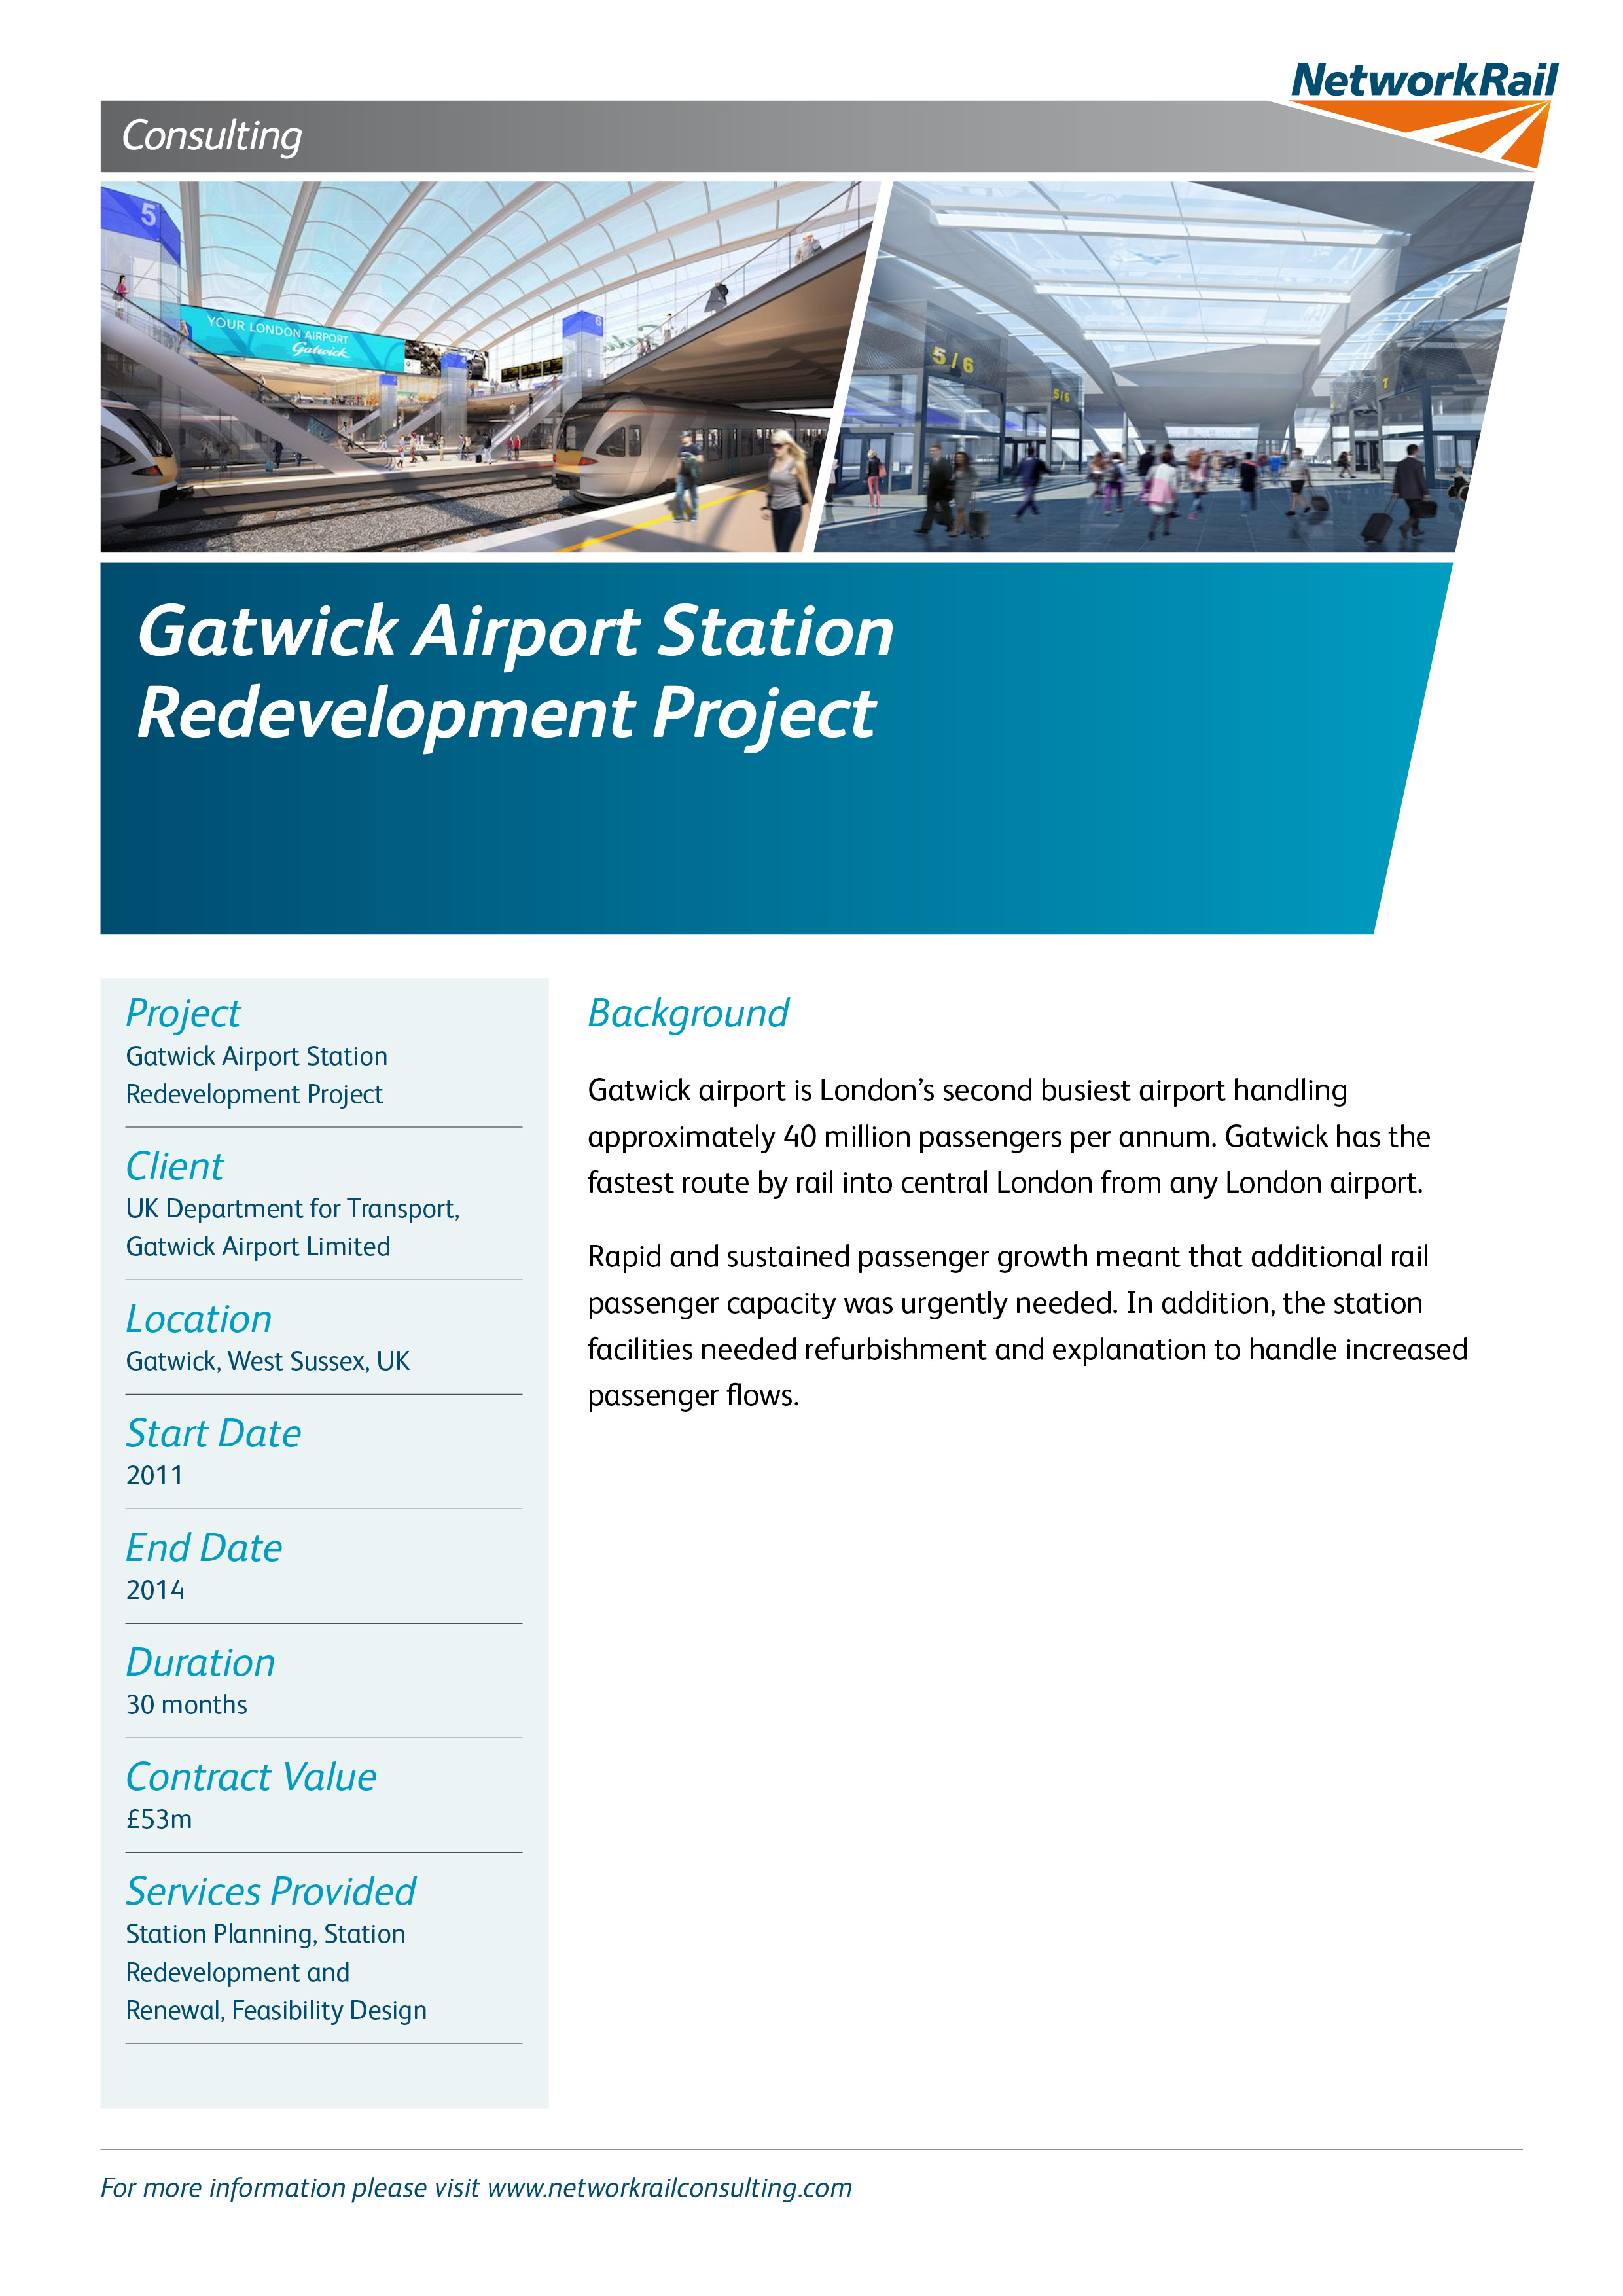 Gatwick Airport Station Redevelopment